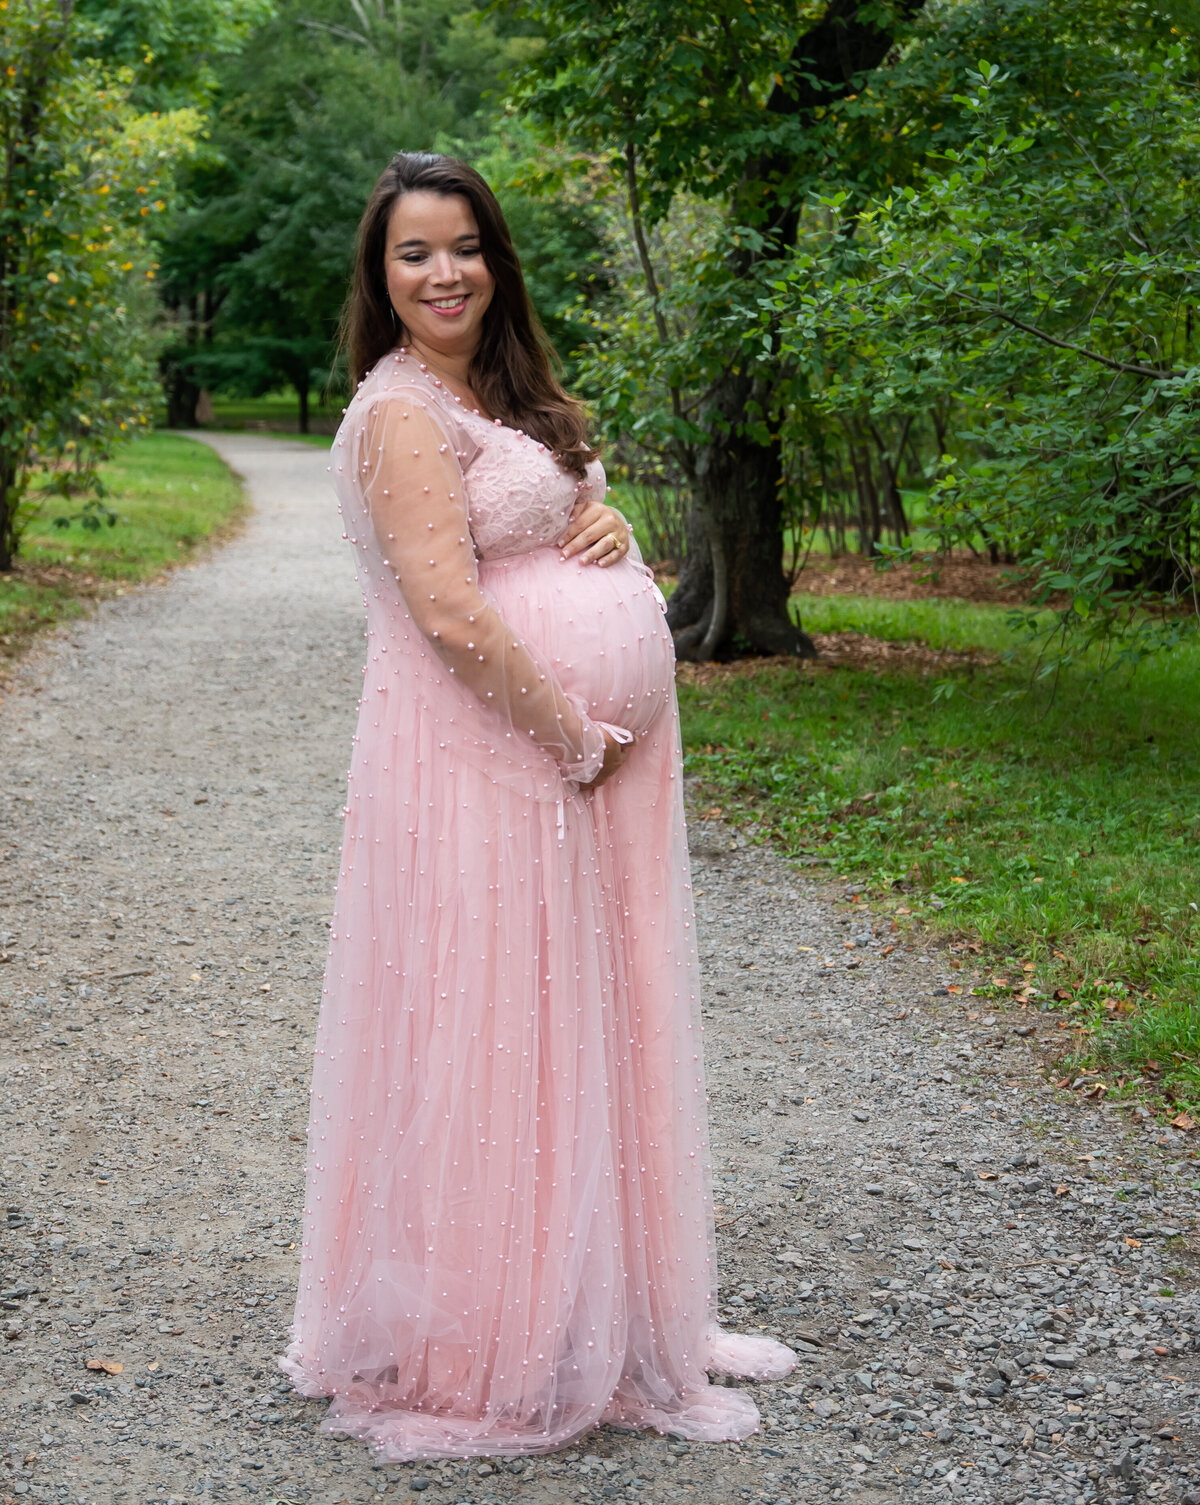 Boston Maternity Photography